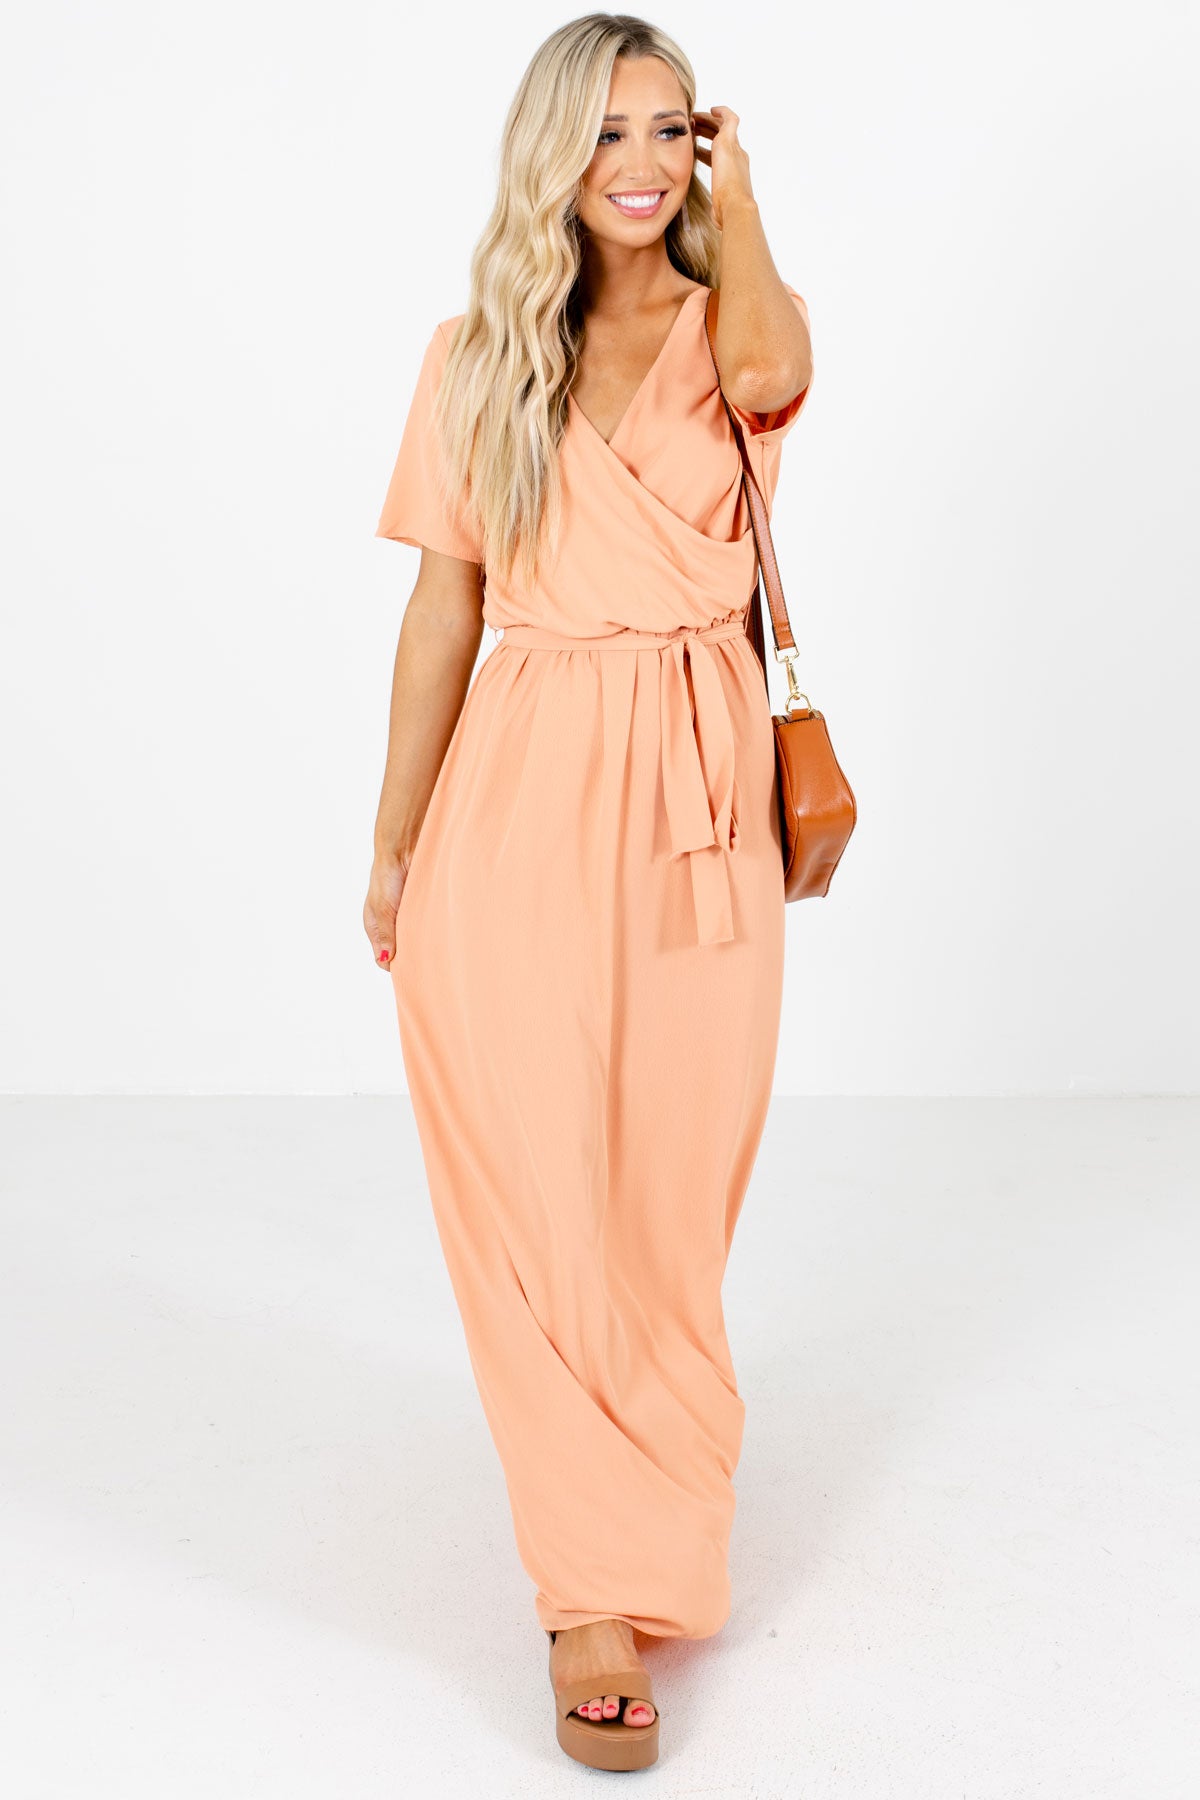 Women's Peach High-Quality Material Boutique Maxi Dress